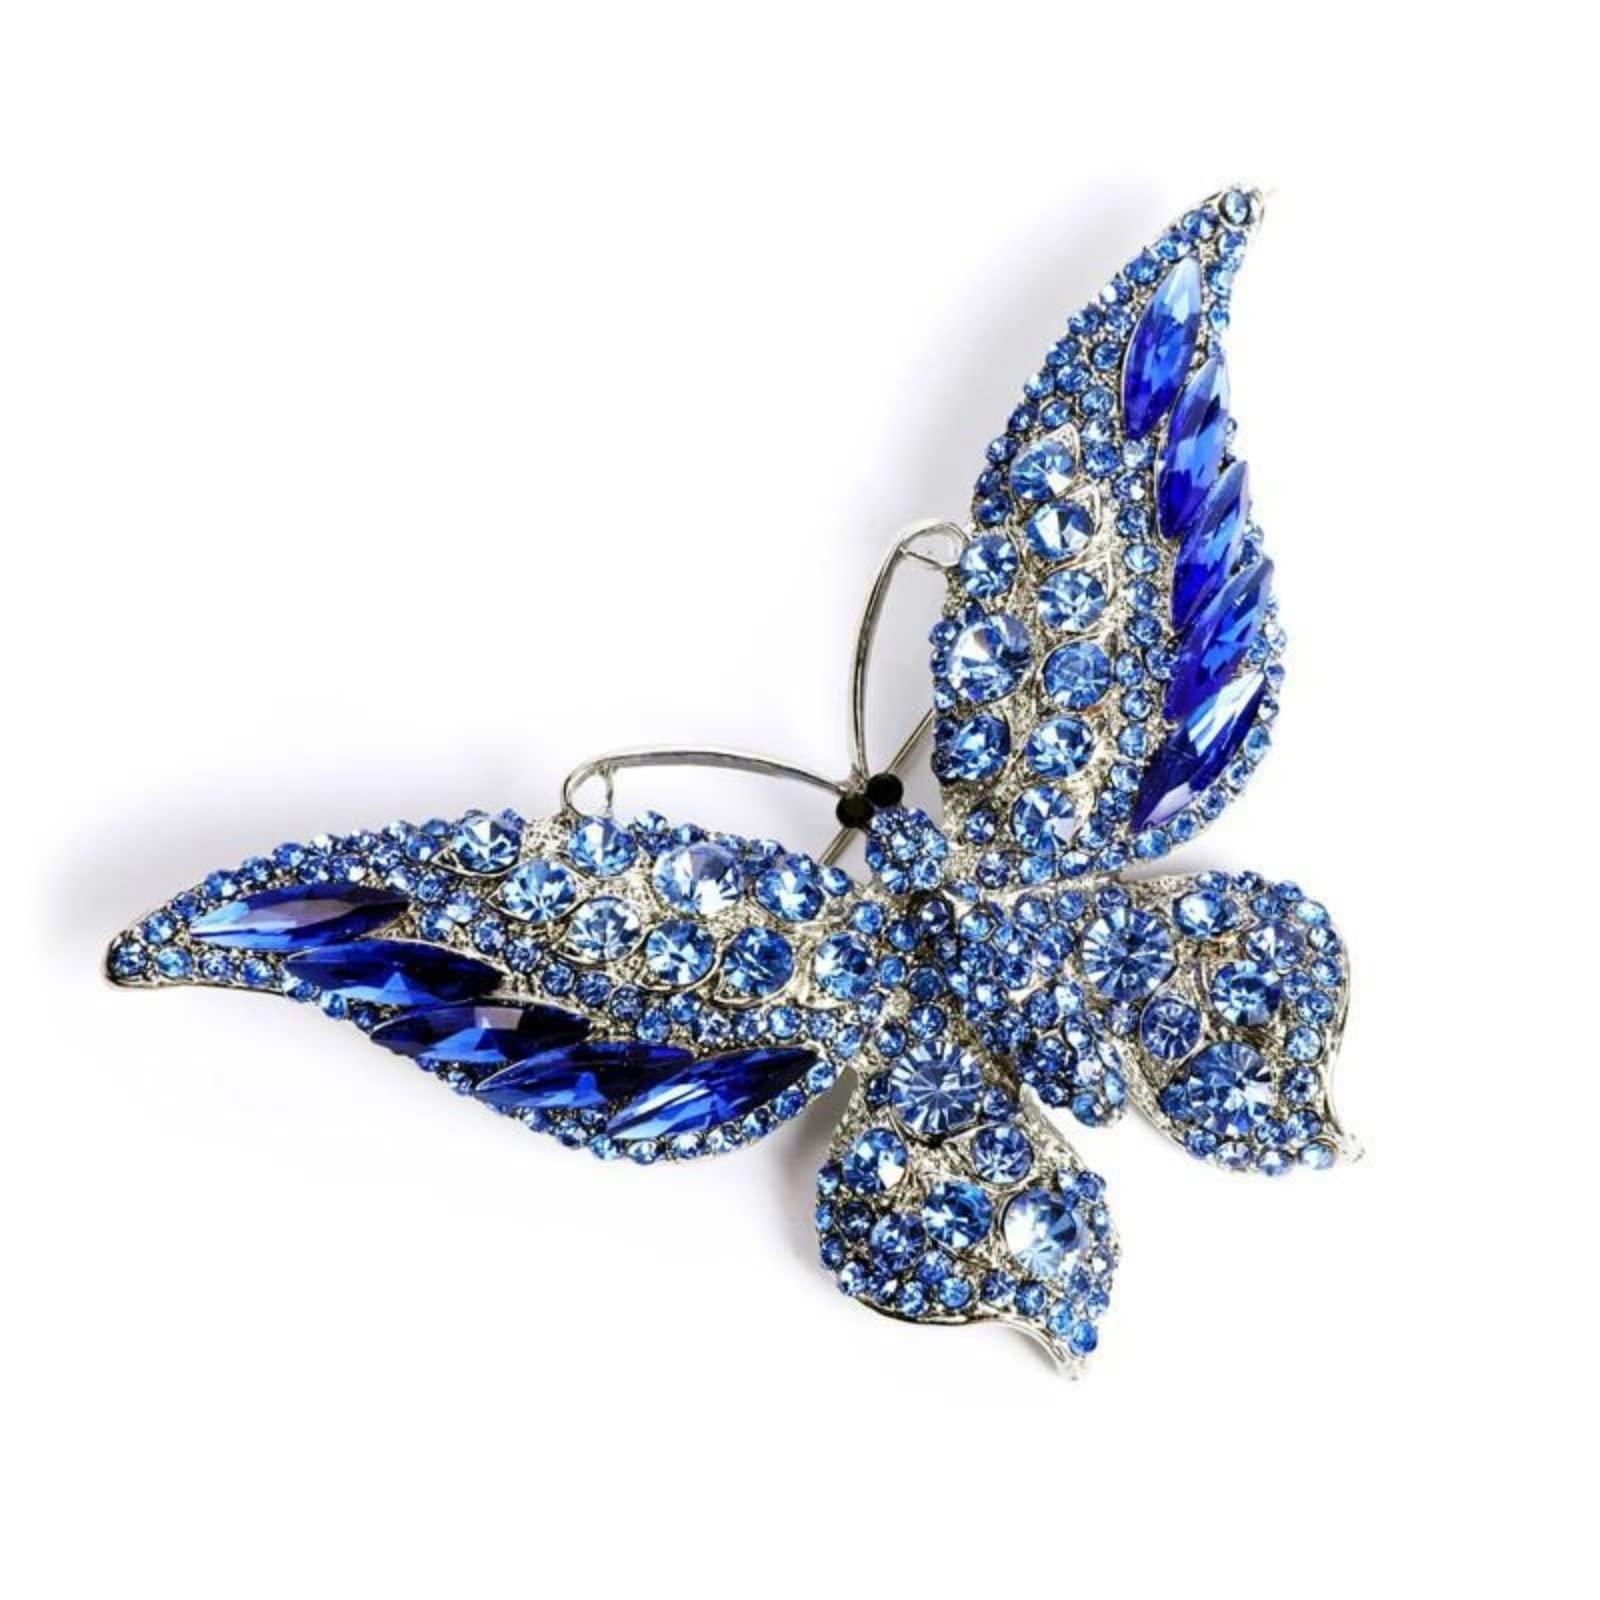 Crystal Rhinestone Butterfly Brooch Elegant Lapel Pin Girls Girls Gift (Blue)